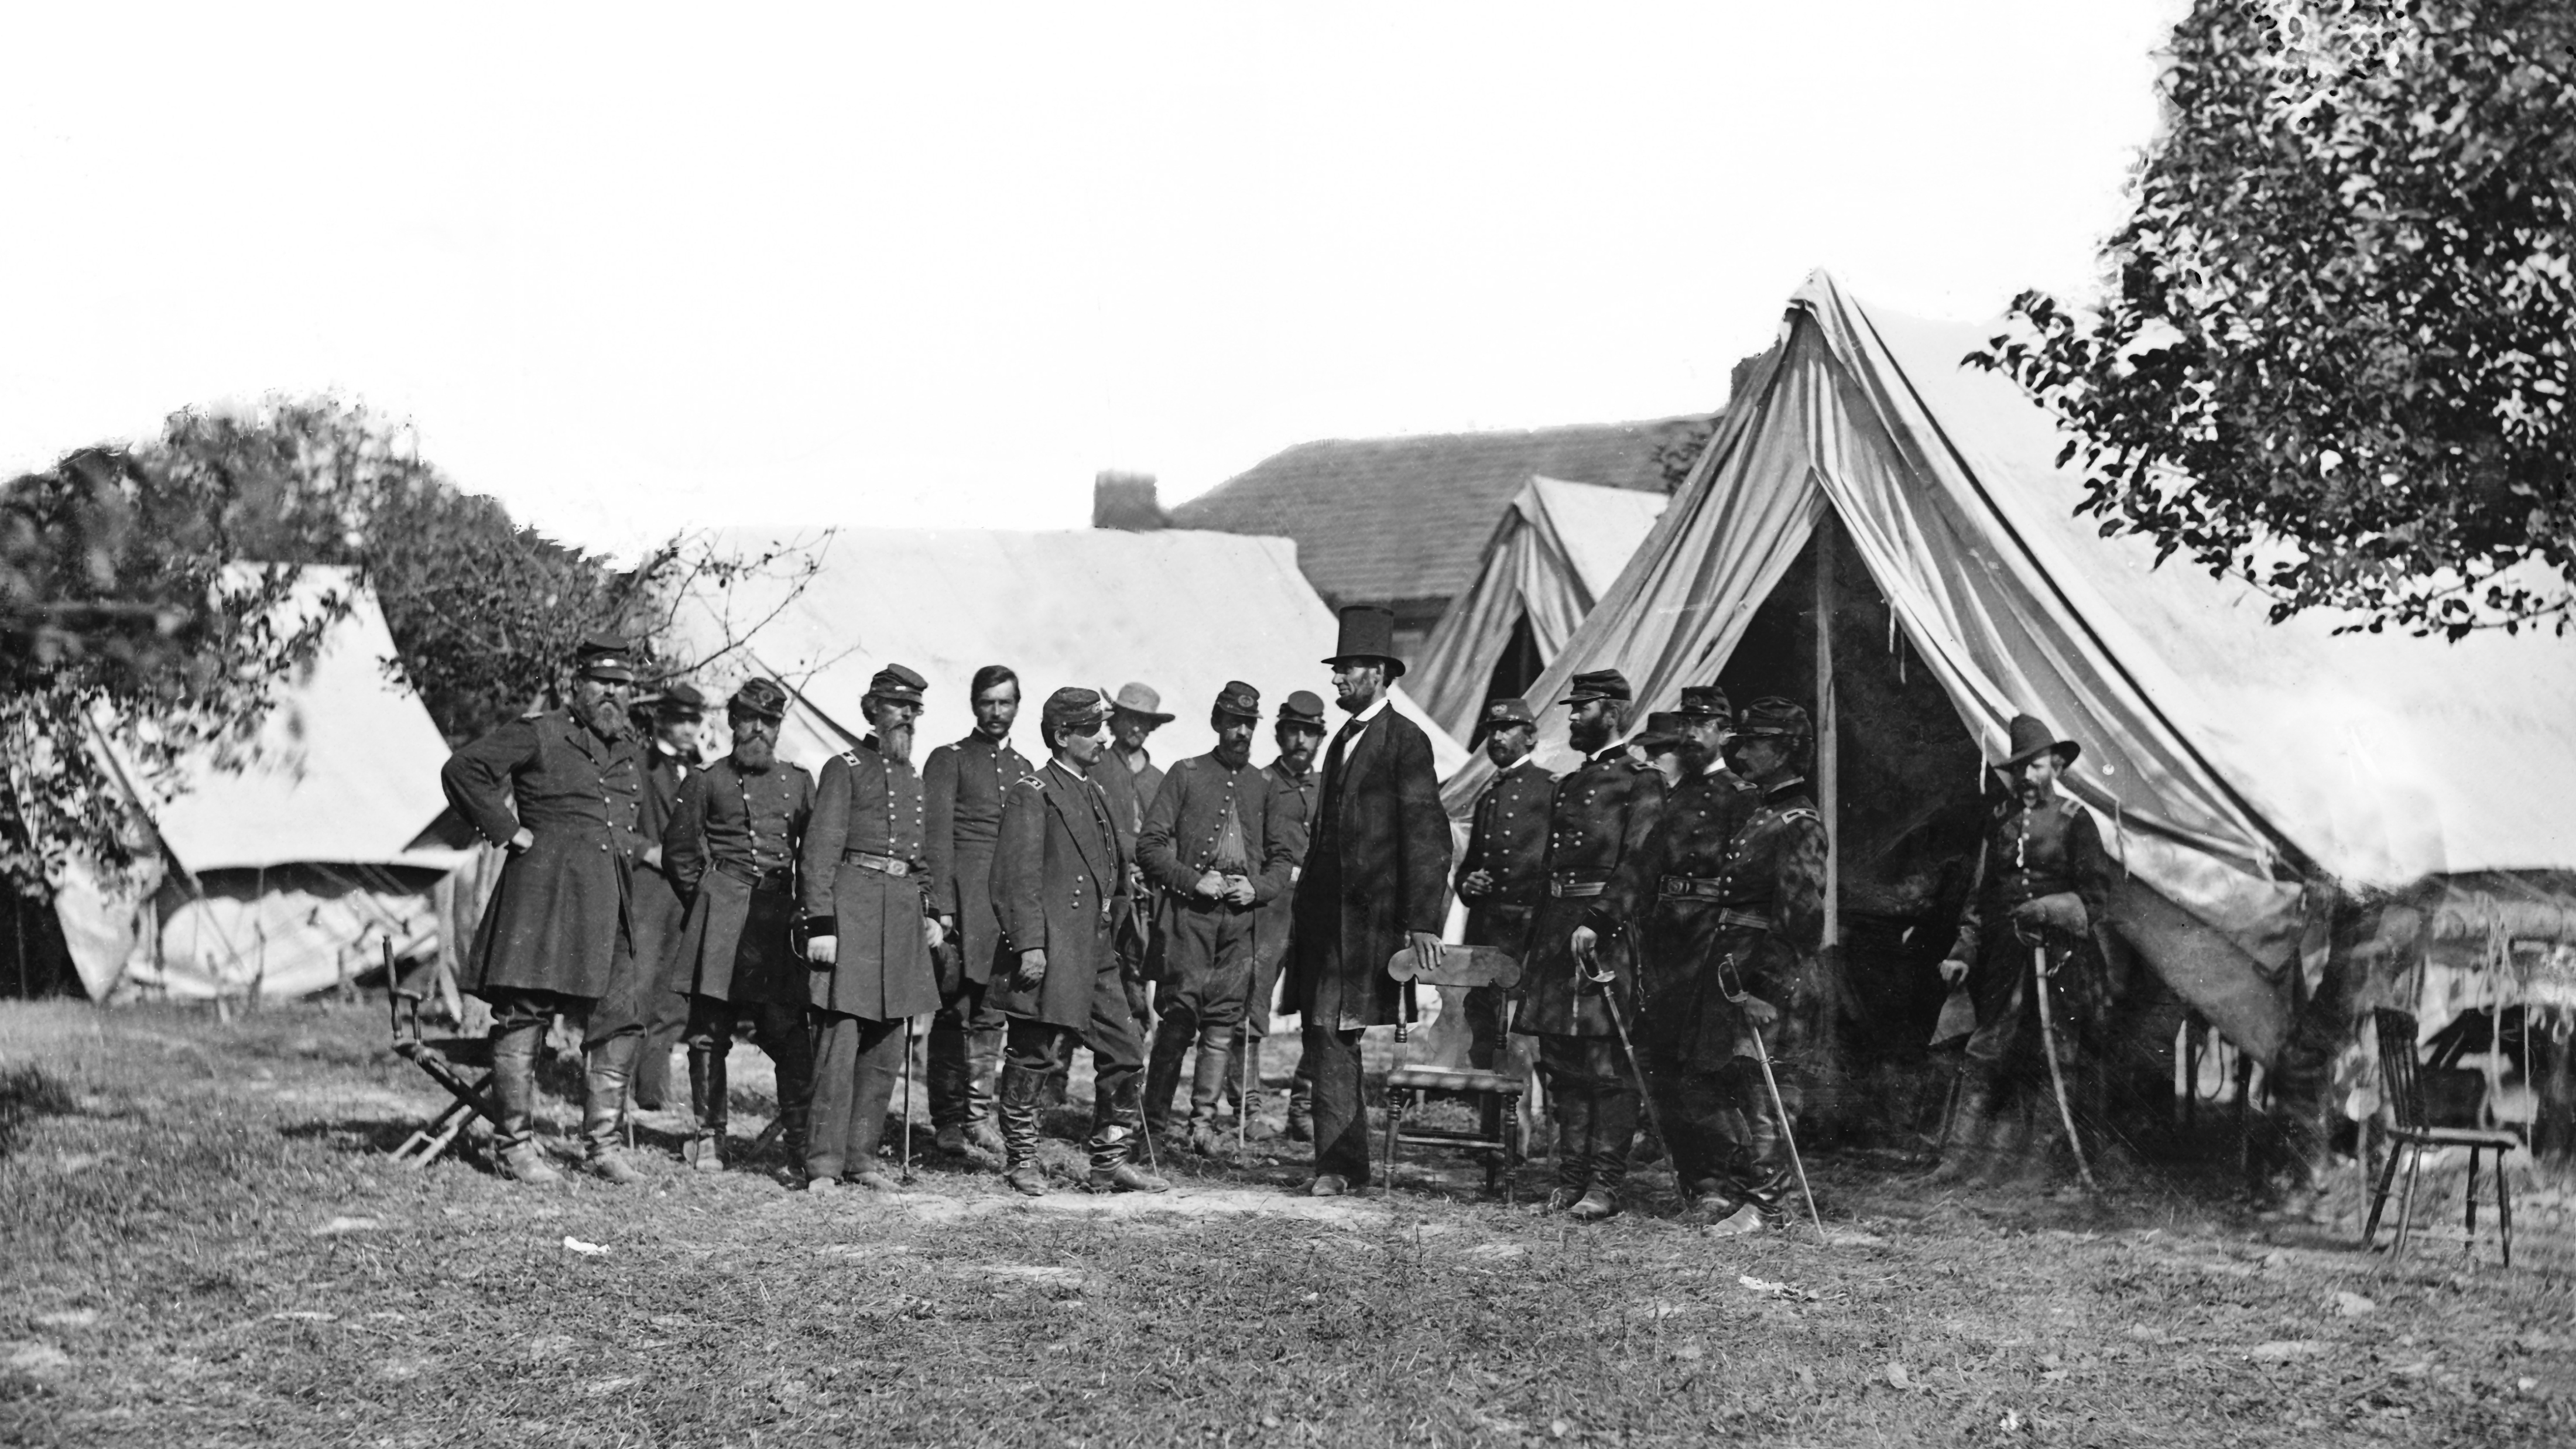 Abraham Lincoln USA Presidents History Monochrome Soldier Camp Military Civil War 4400x2475